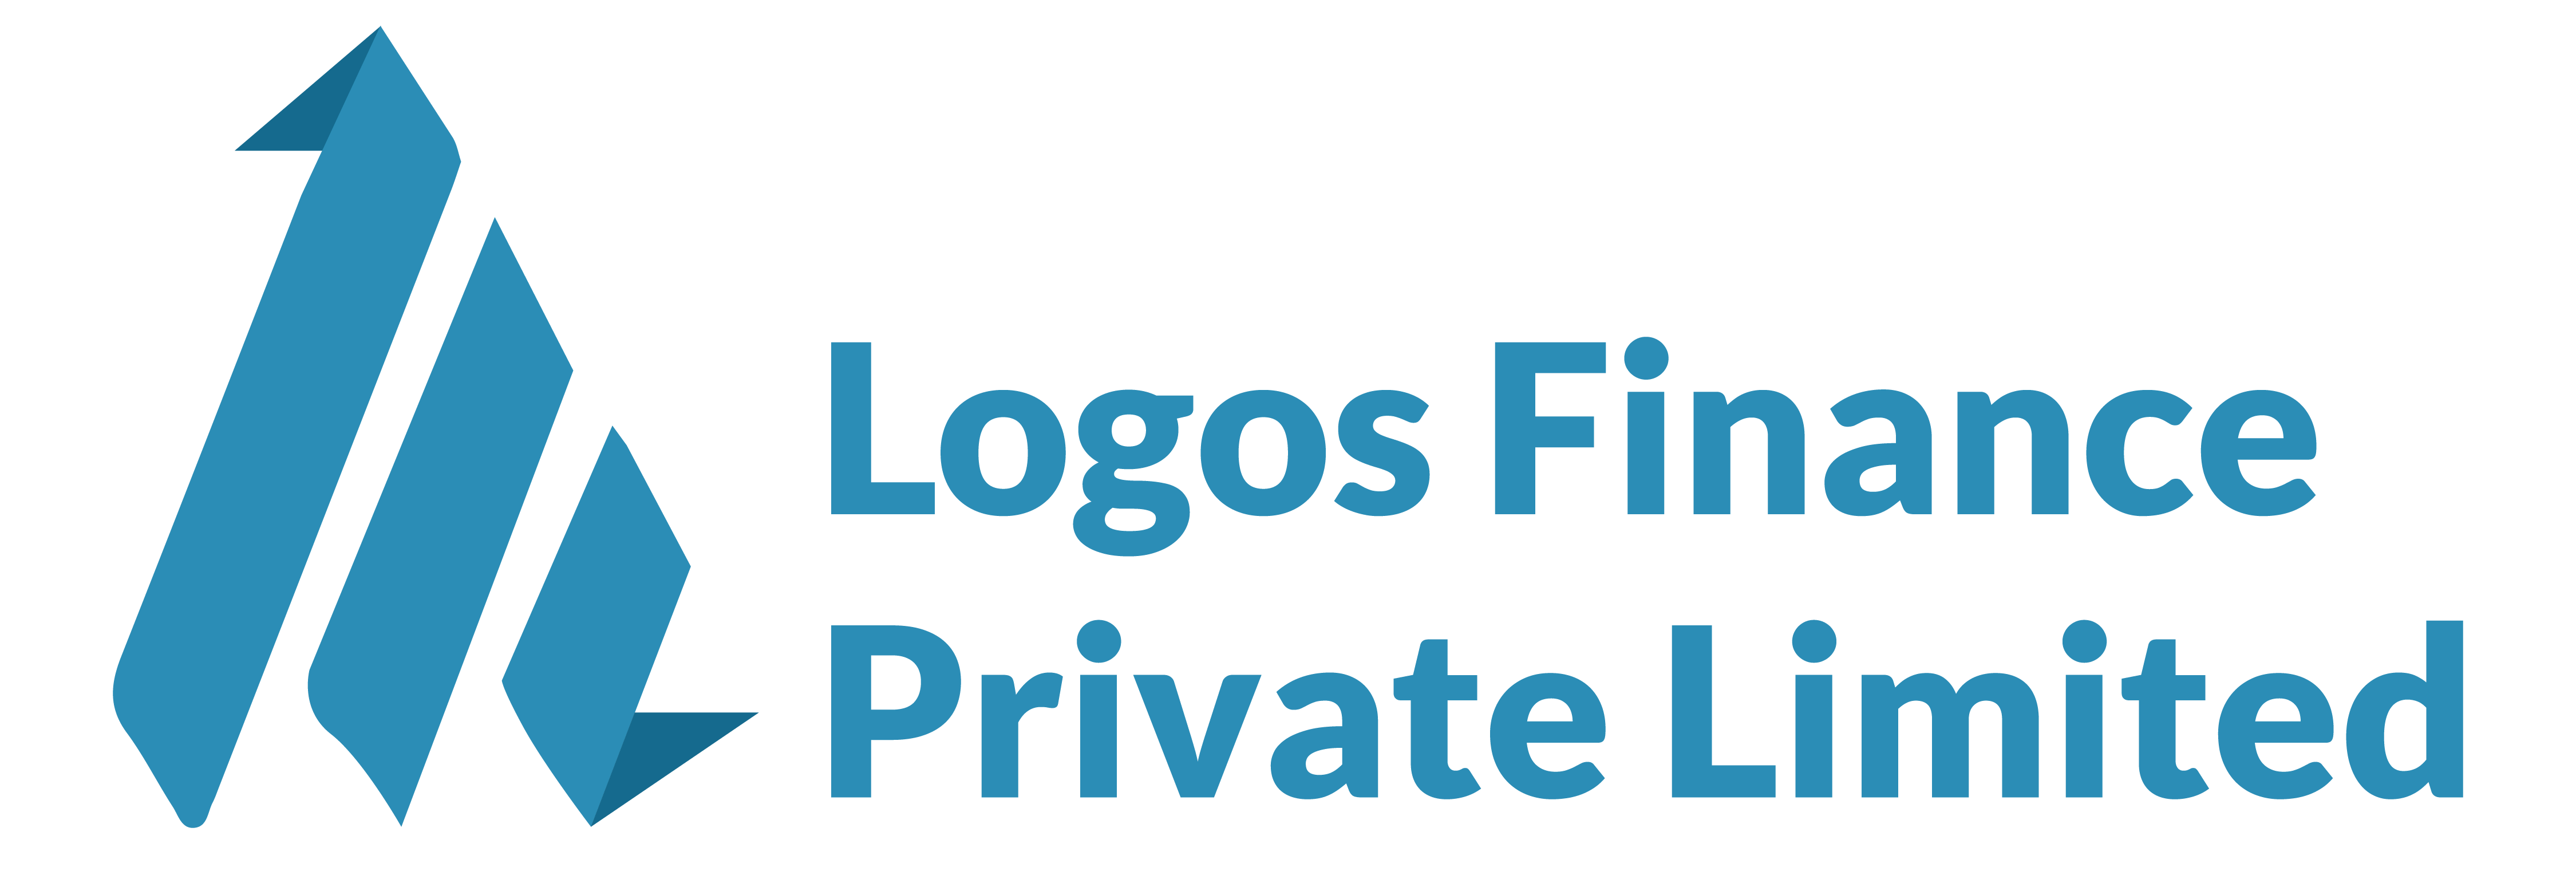 Logos Finance